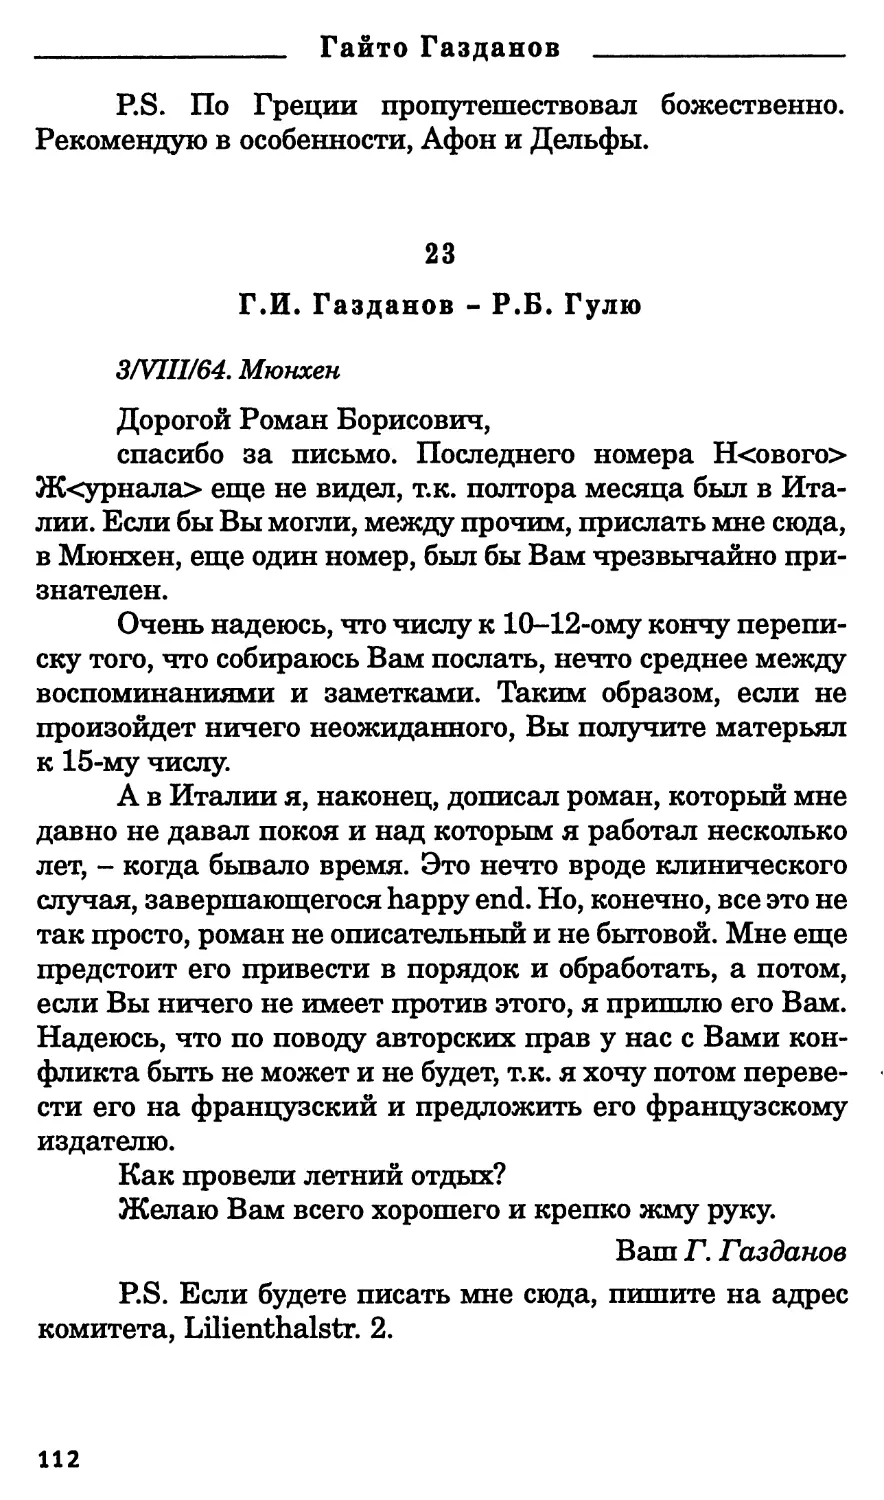 23. Г.И. Газданов - Р.Б. Гулю. 3 августа 1964 г.